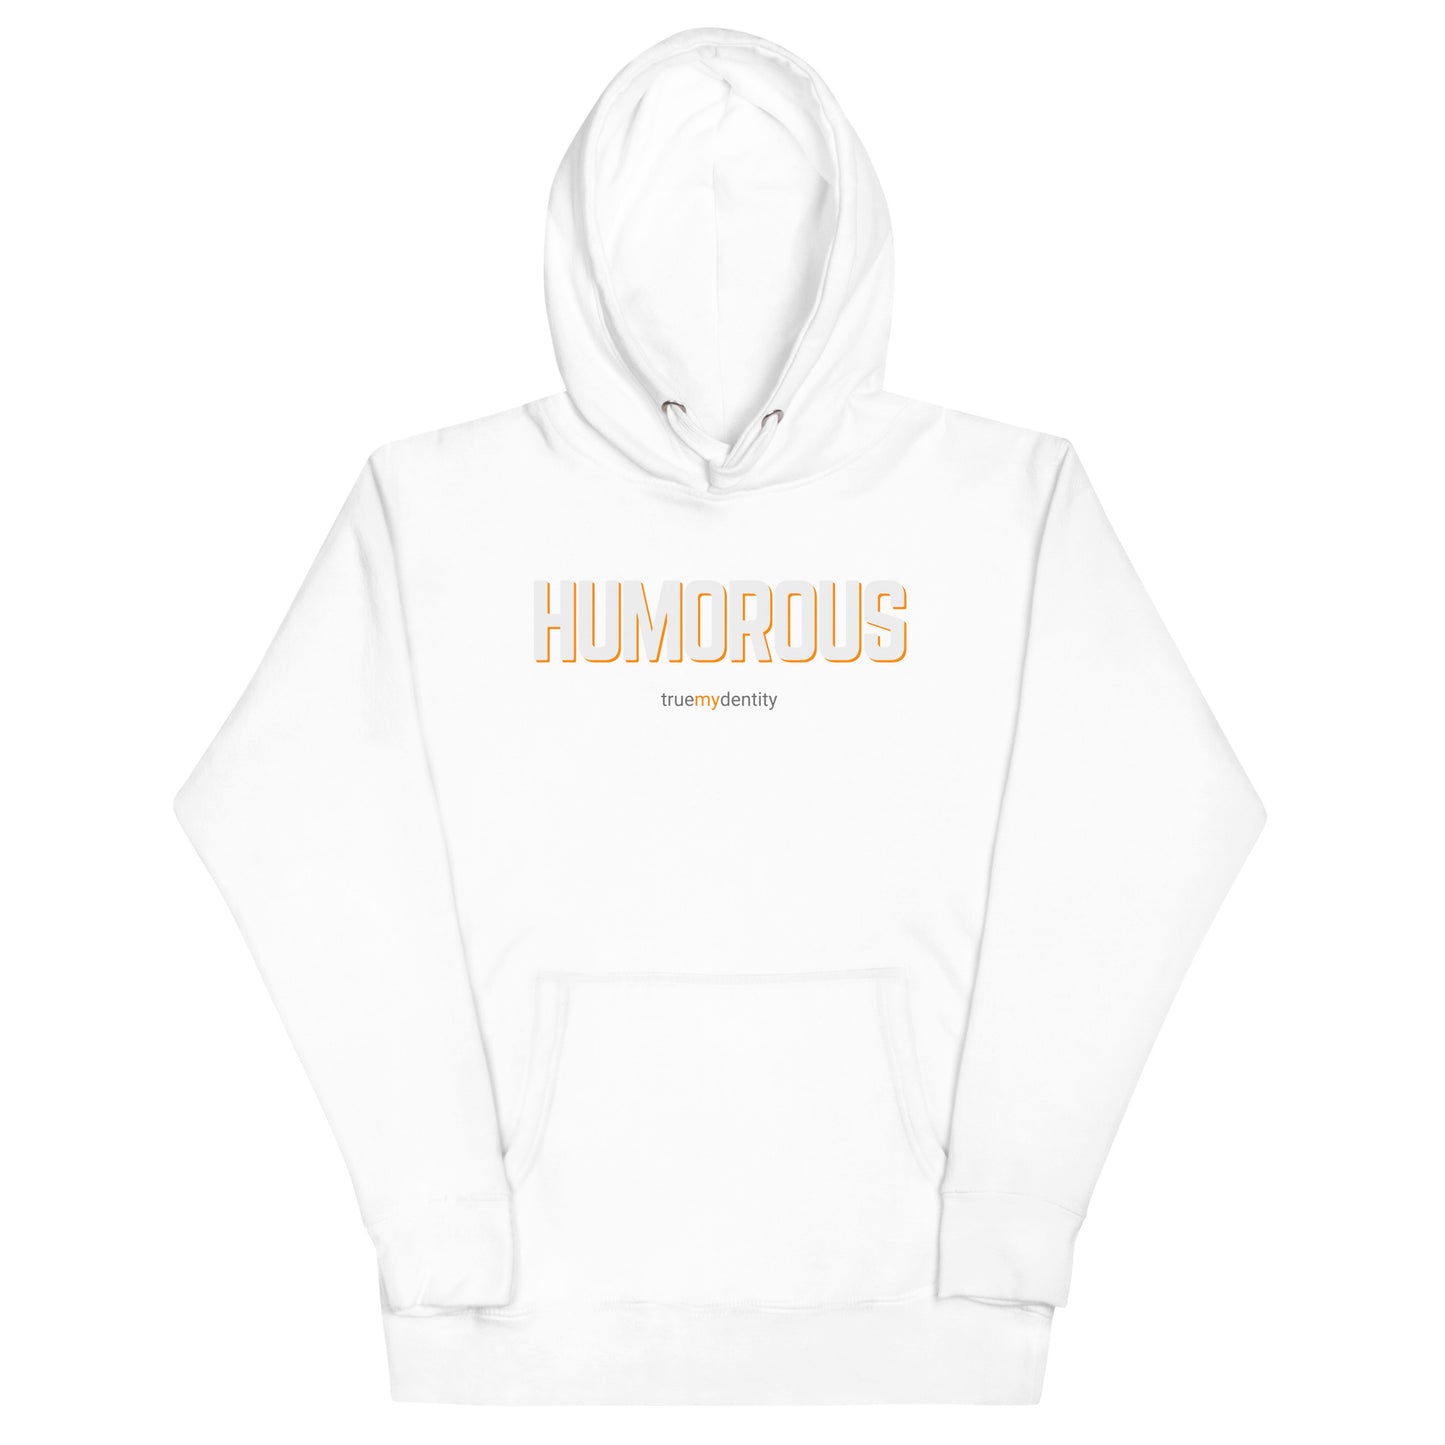 HUMOROUS Hoodie Bold Design | Unisex